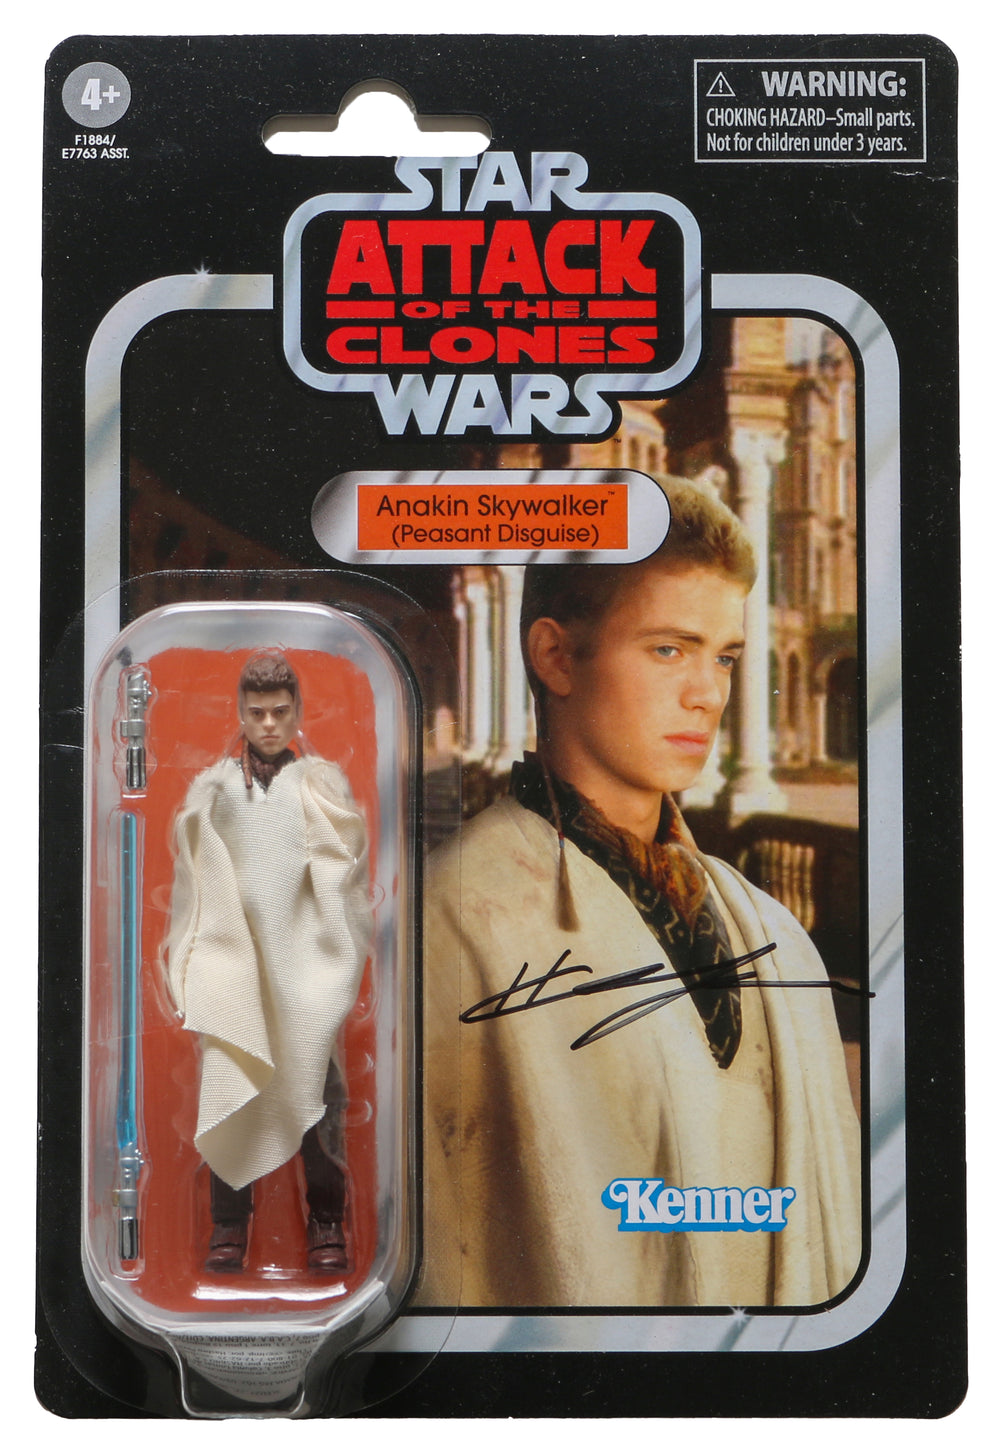 Hayden Christensen as Anakin Skywalker in Star Wars Episode II: Attack of the Clones (SWAU) Signed Action Figure